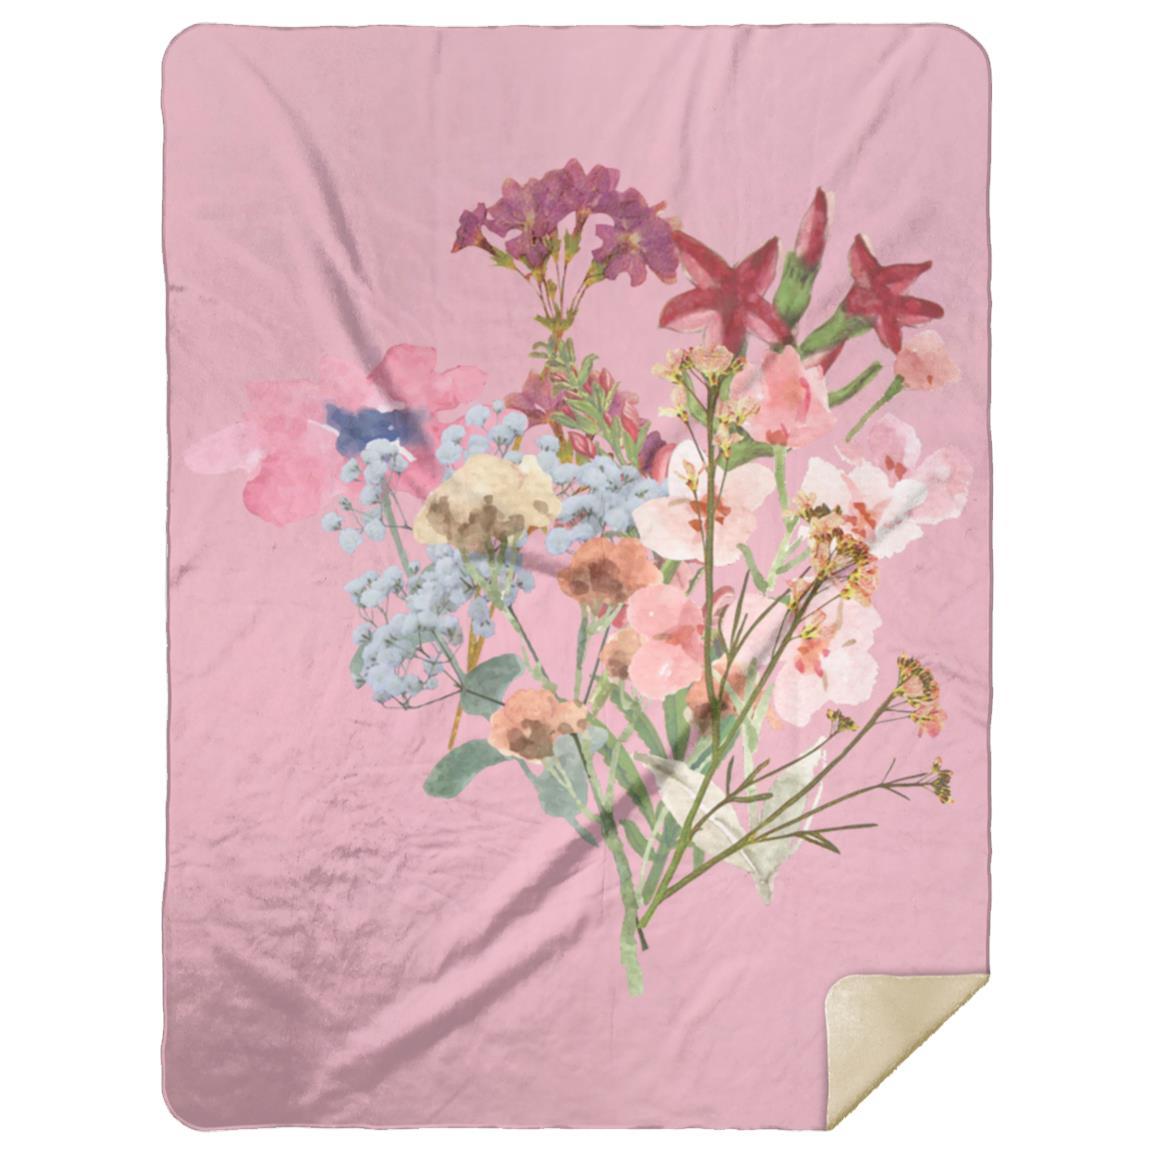 Watercolor Flowers t-shirt MSHL Premium Mink Sherpa Blanket 60x80